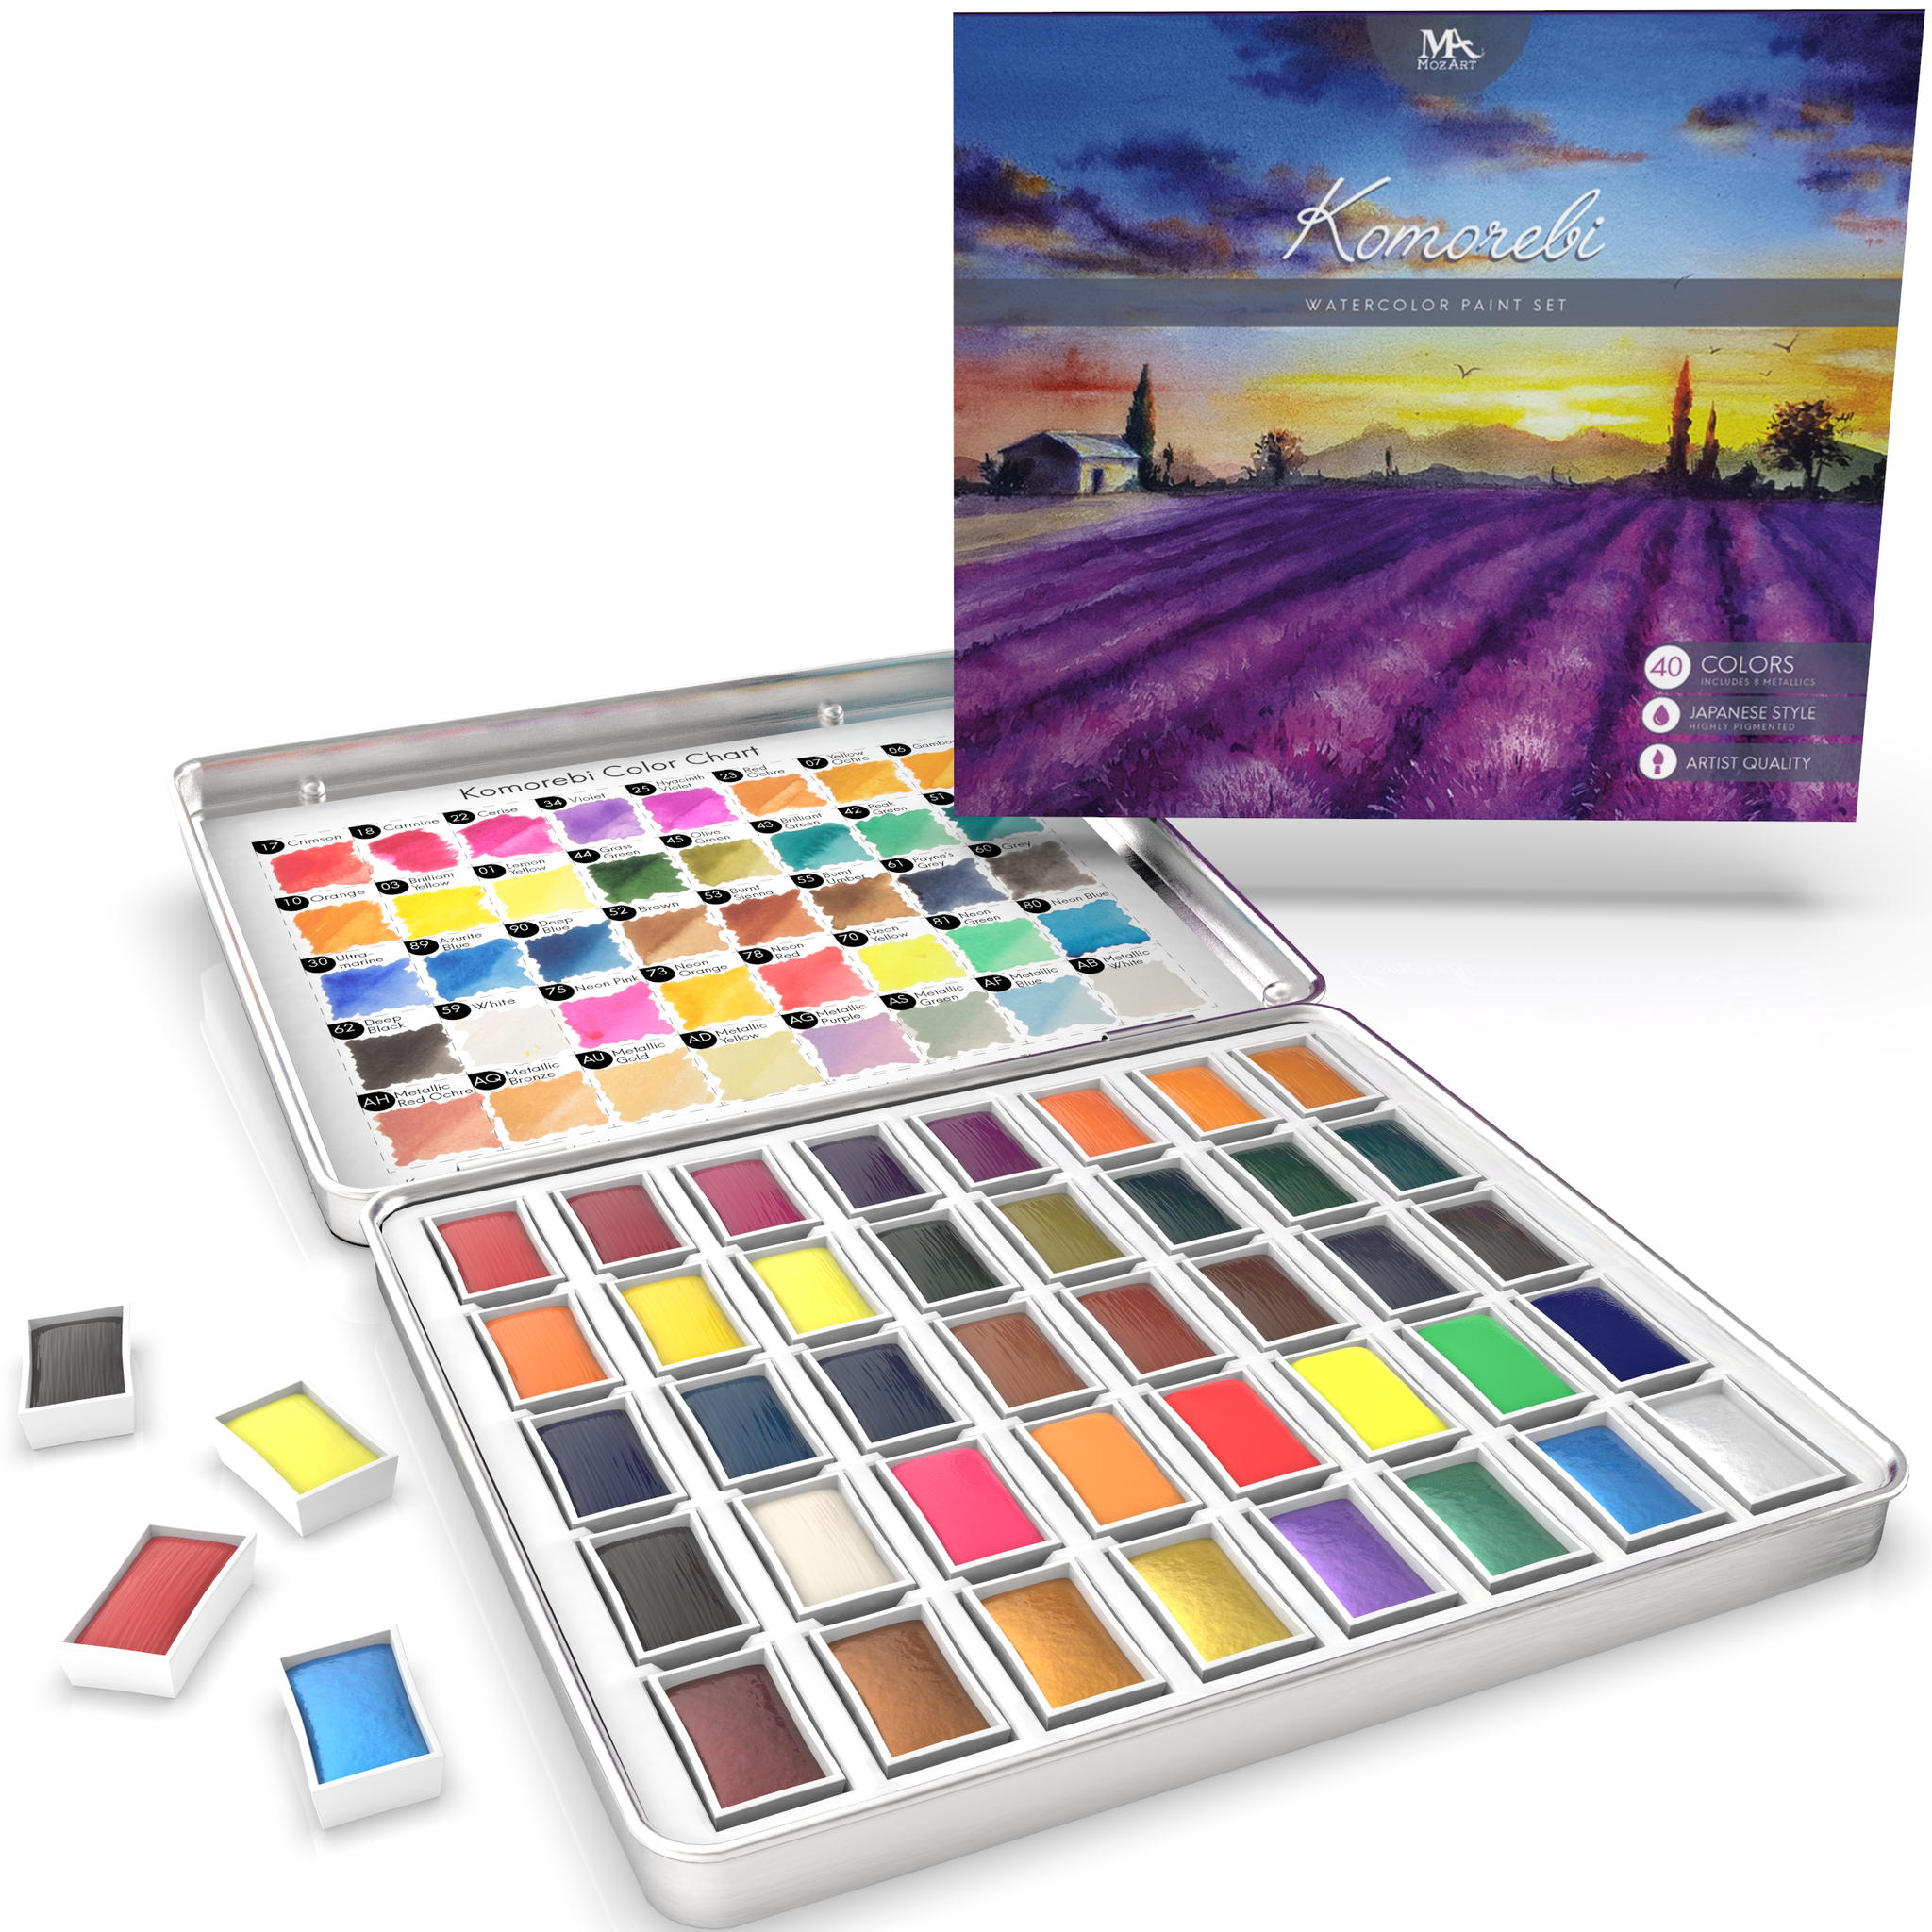 Komorebi Japanese Watercolor Paint Set - 40 Fantastic Colors - MozArt  Supplies USA